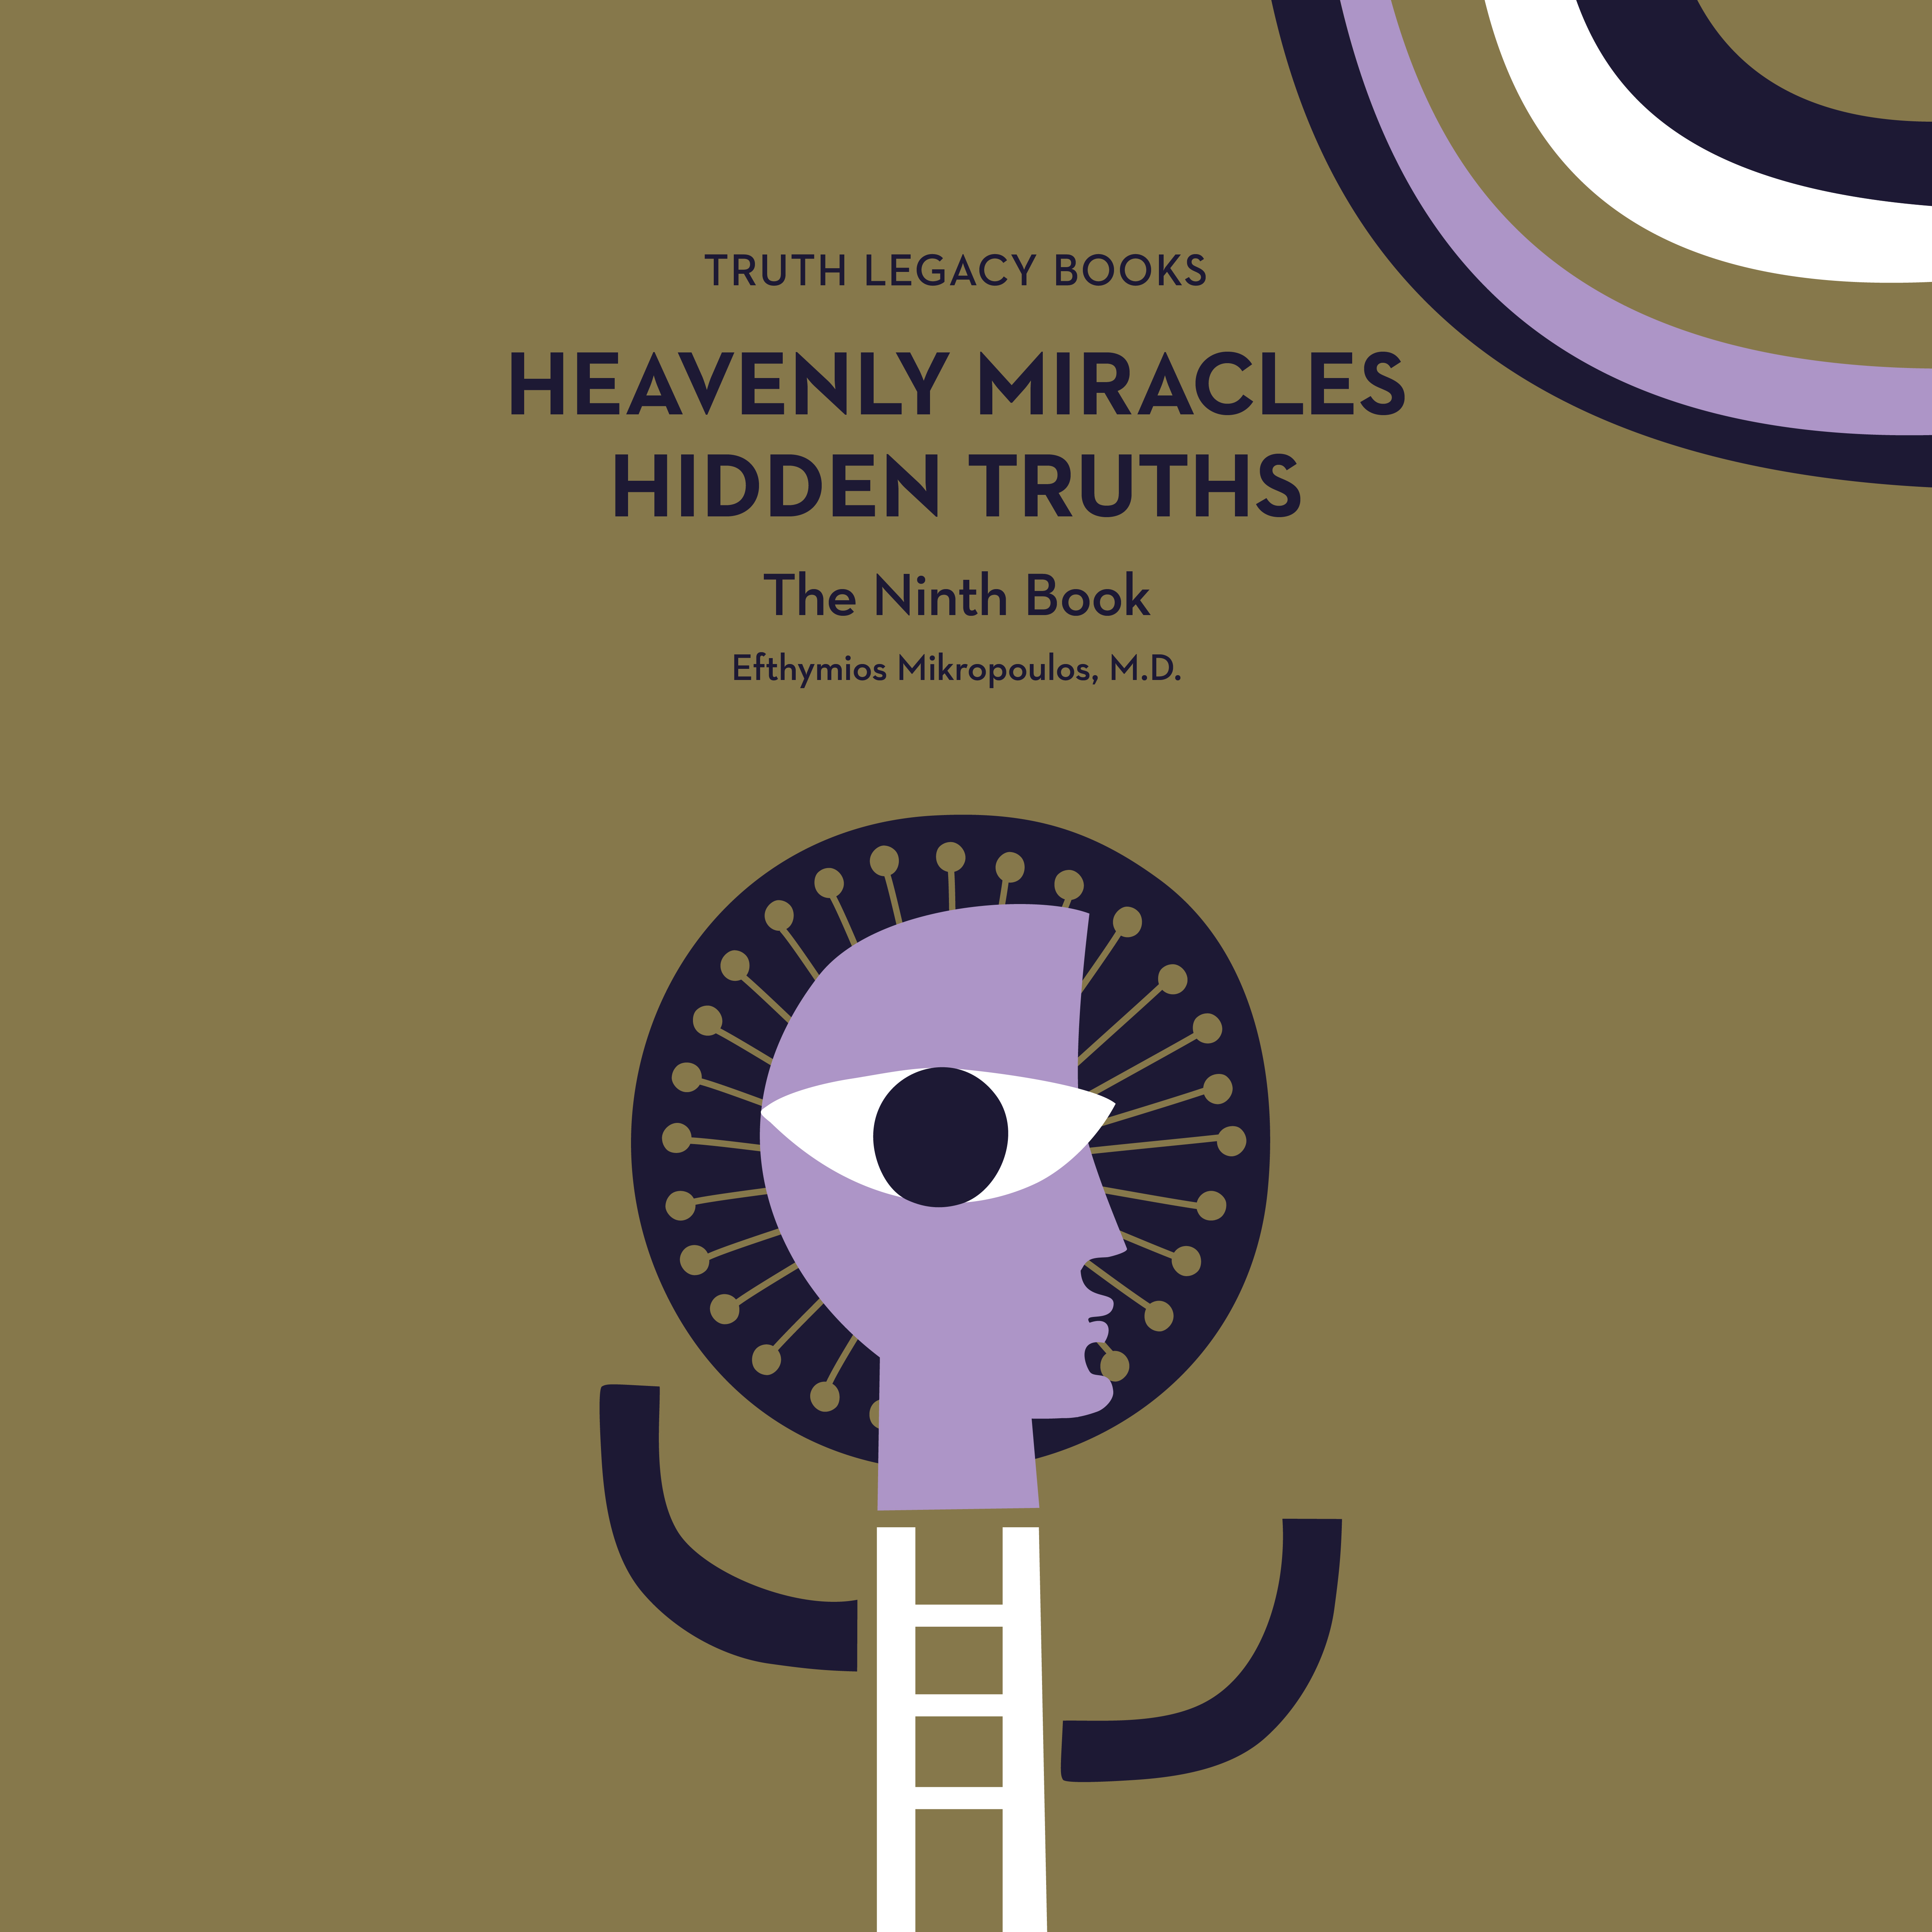 HEAVENLY MIRACLES - HIDDEN TRUTHS